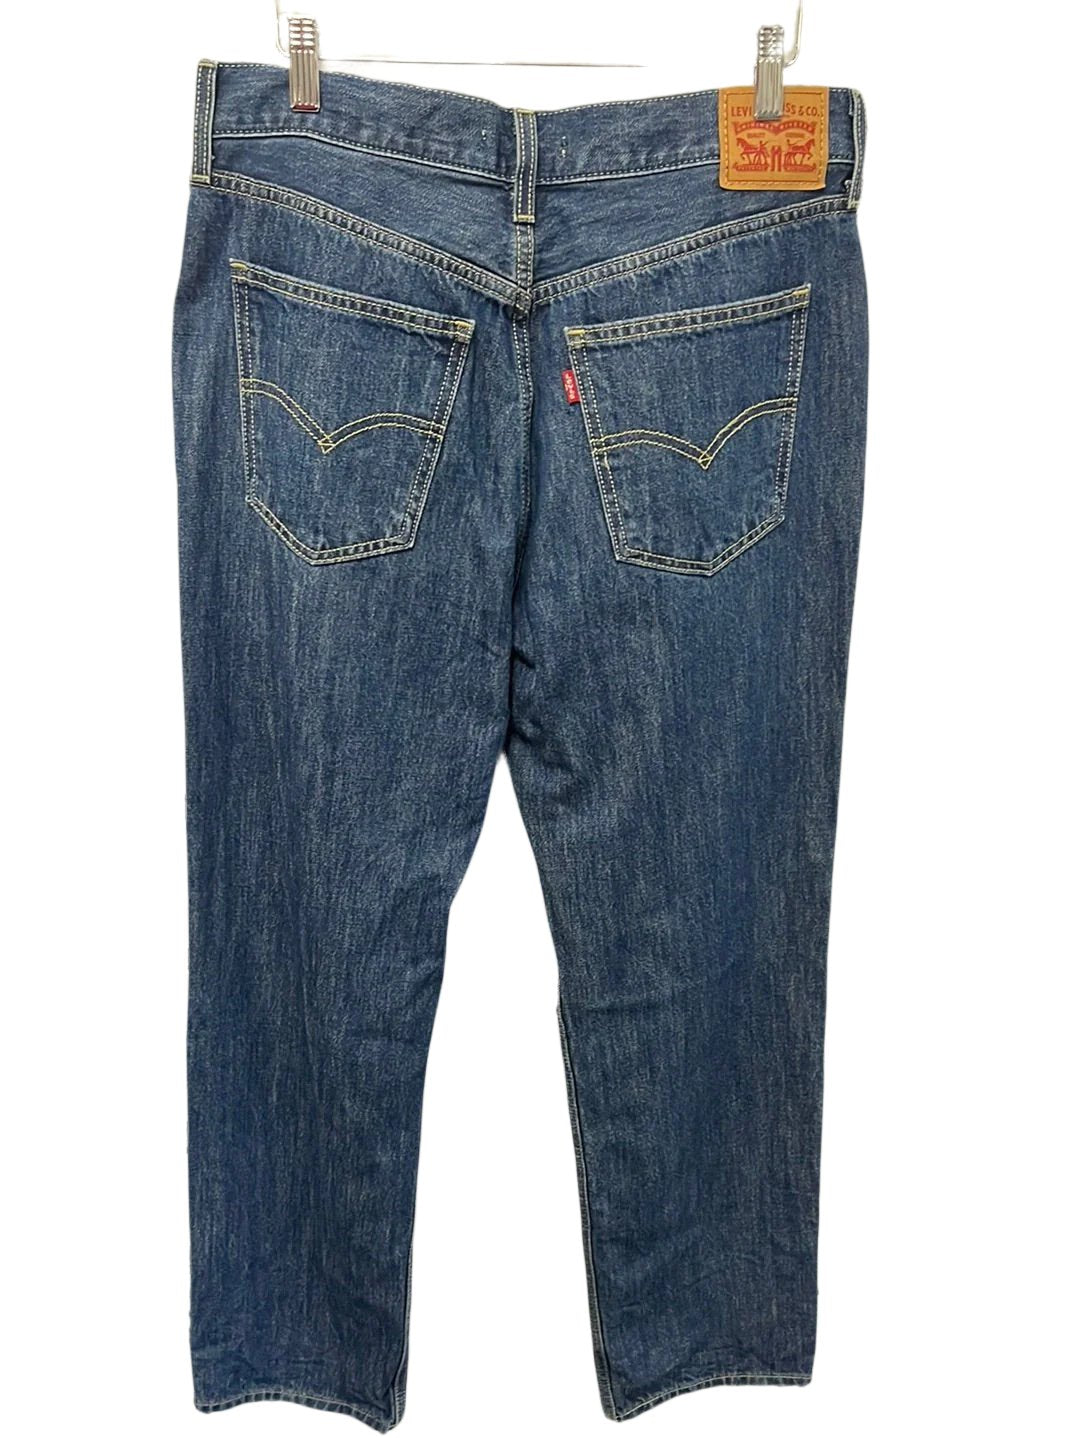 Levi's Low Pro Straight Jeans - Size 30